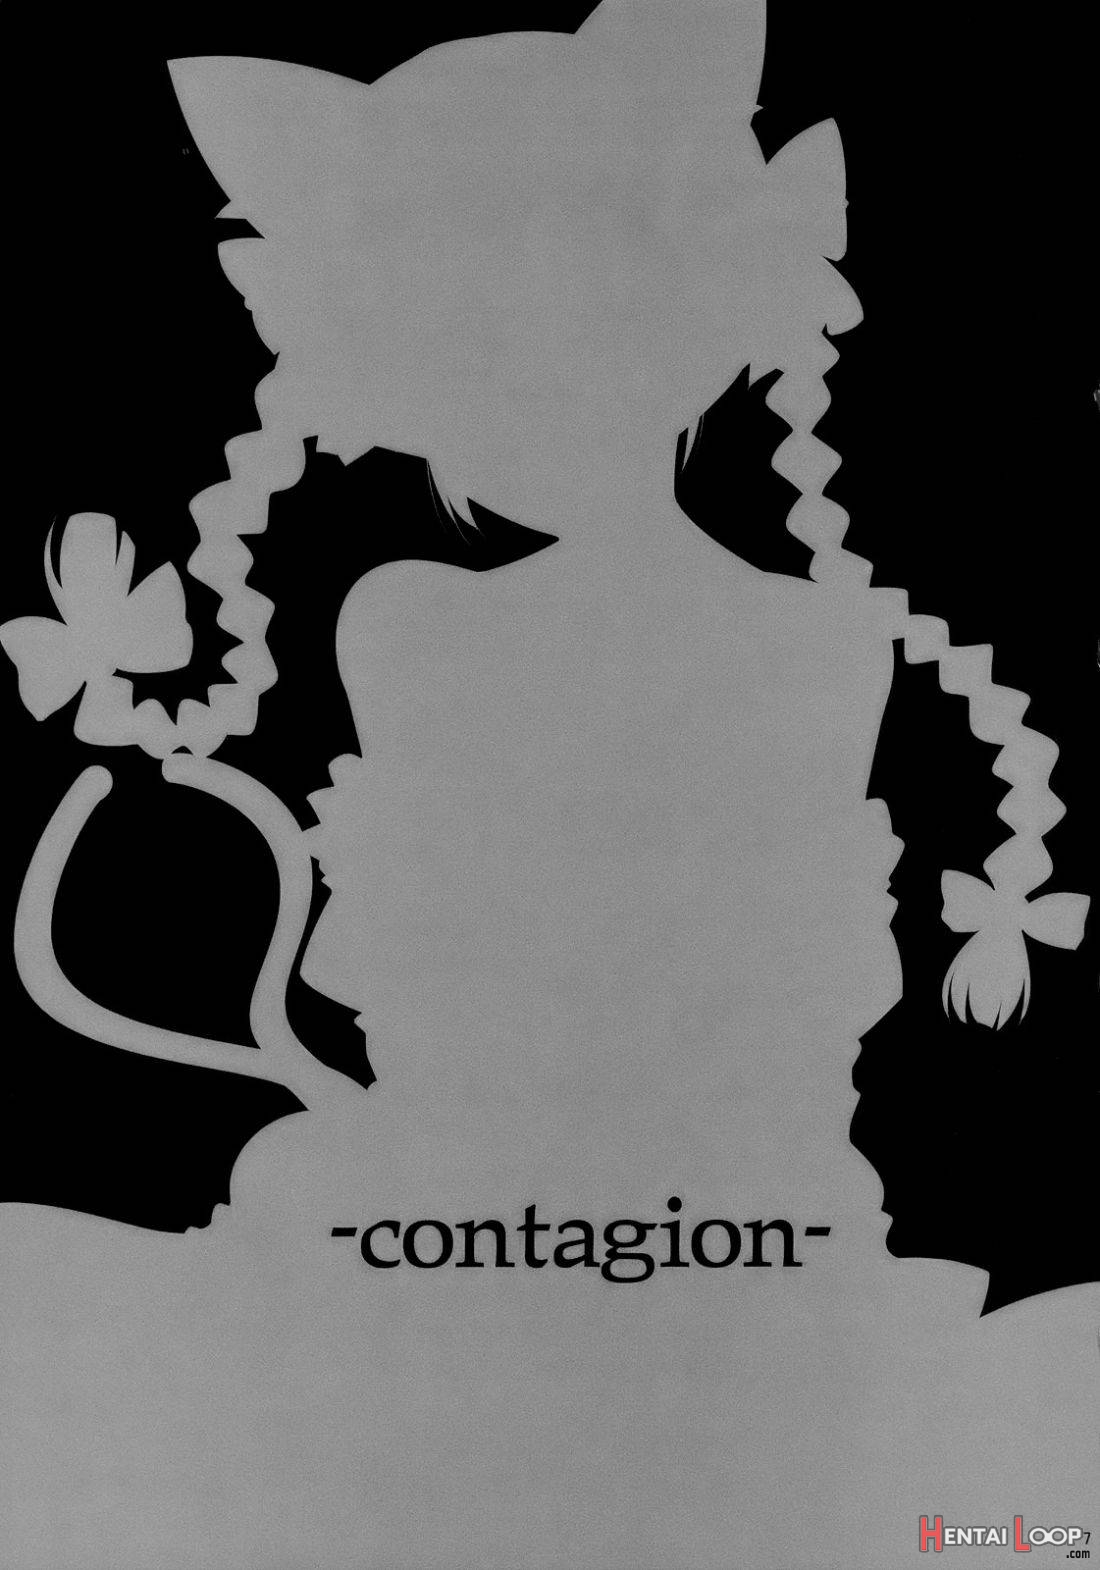 Contagion page 6